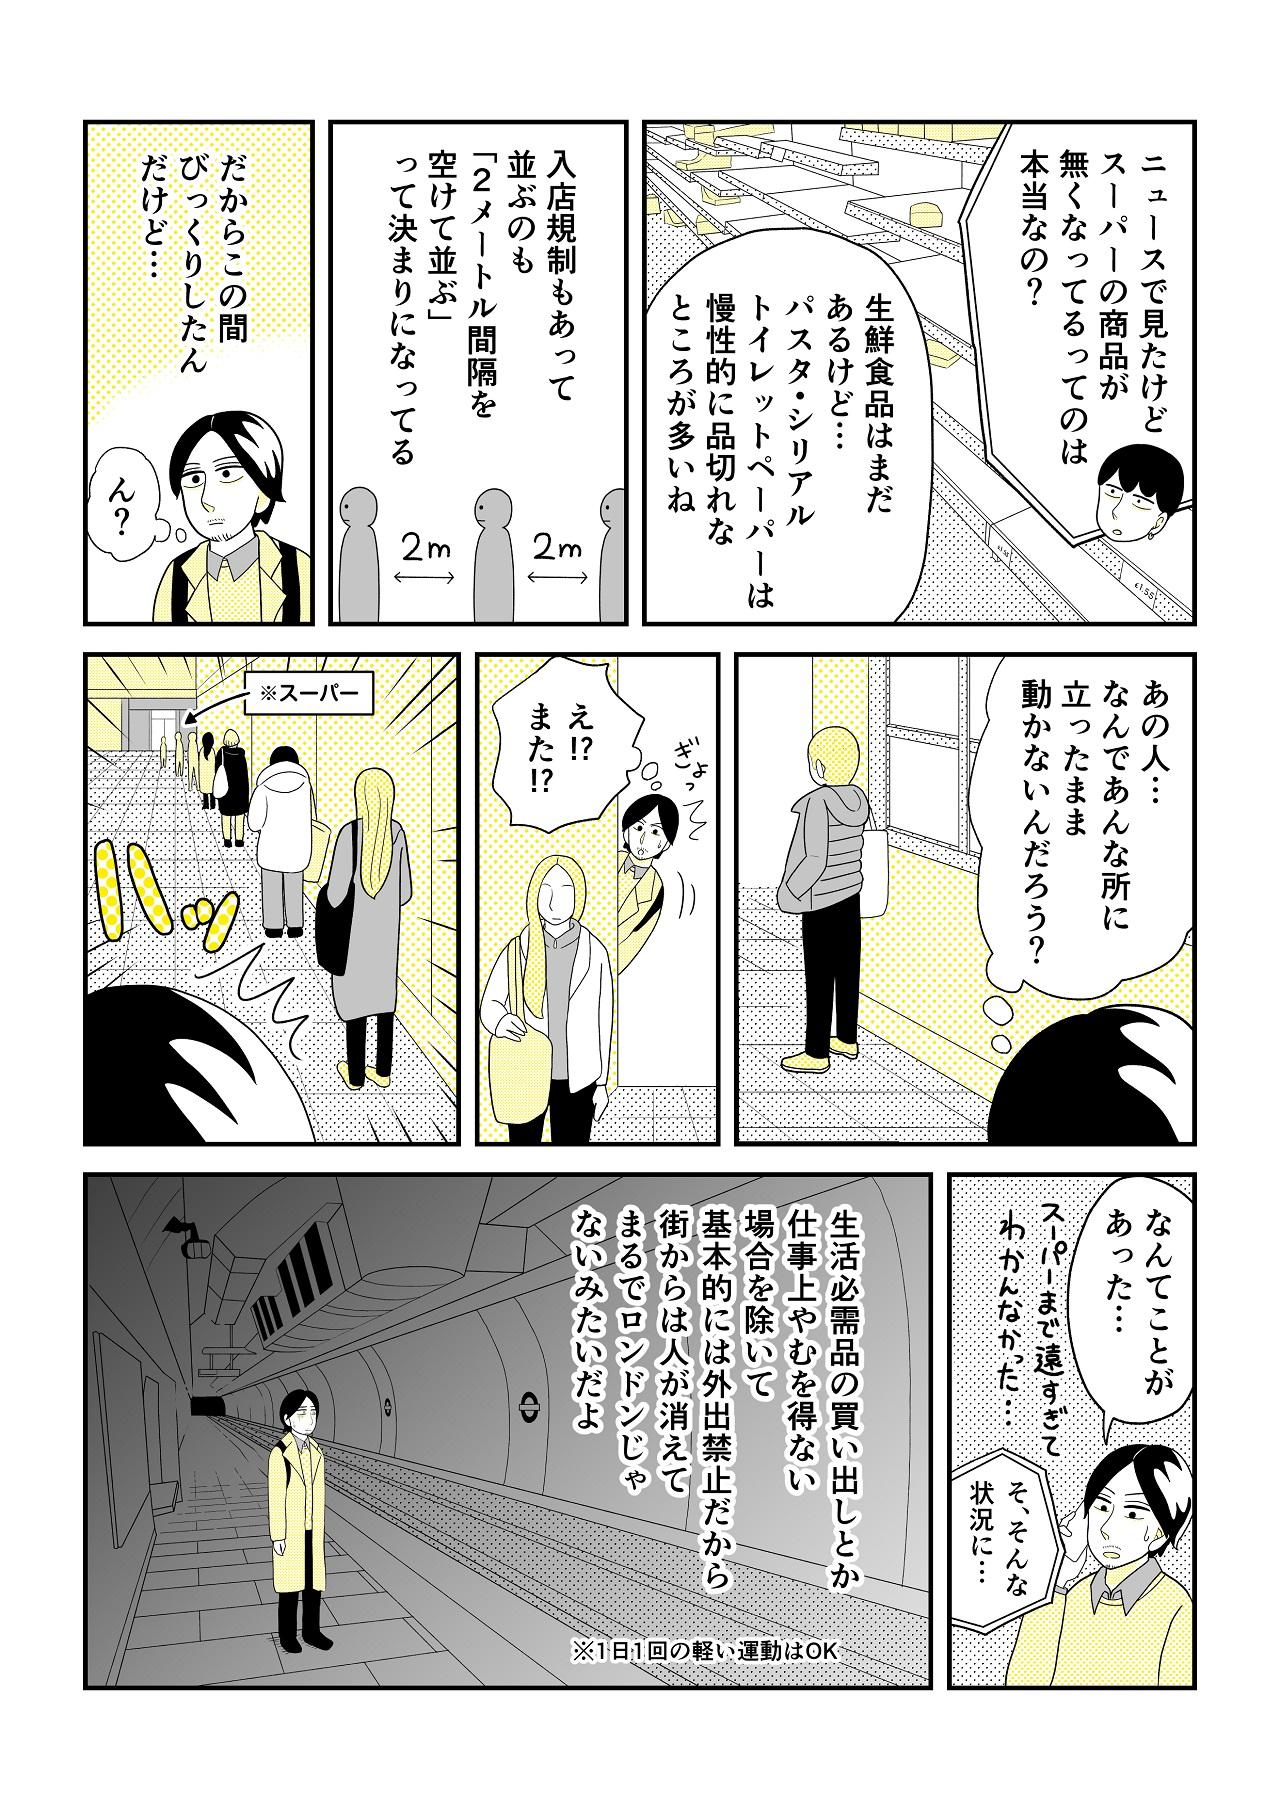 https://www.ryugaku.co.jp/column/images/sp_03_1280.jpg